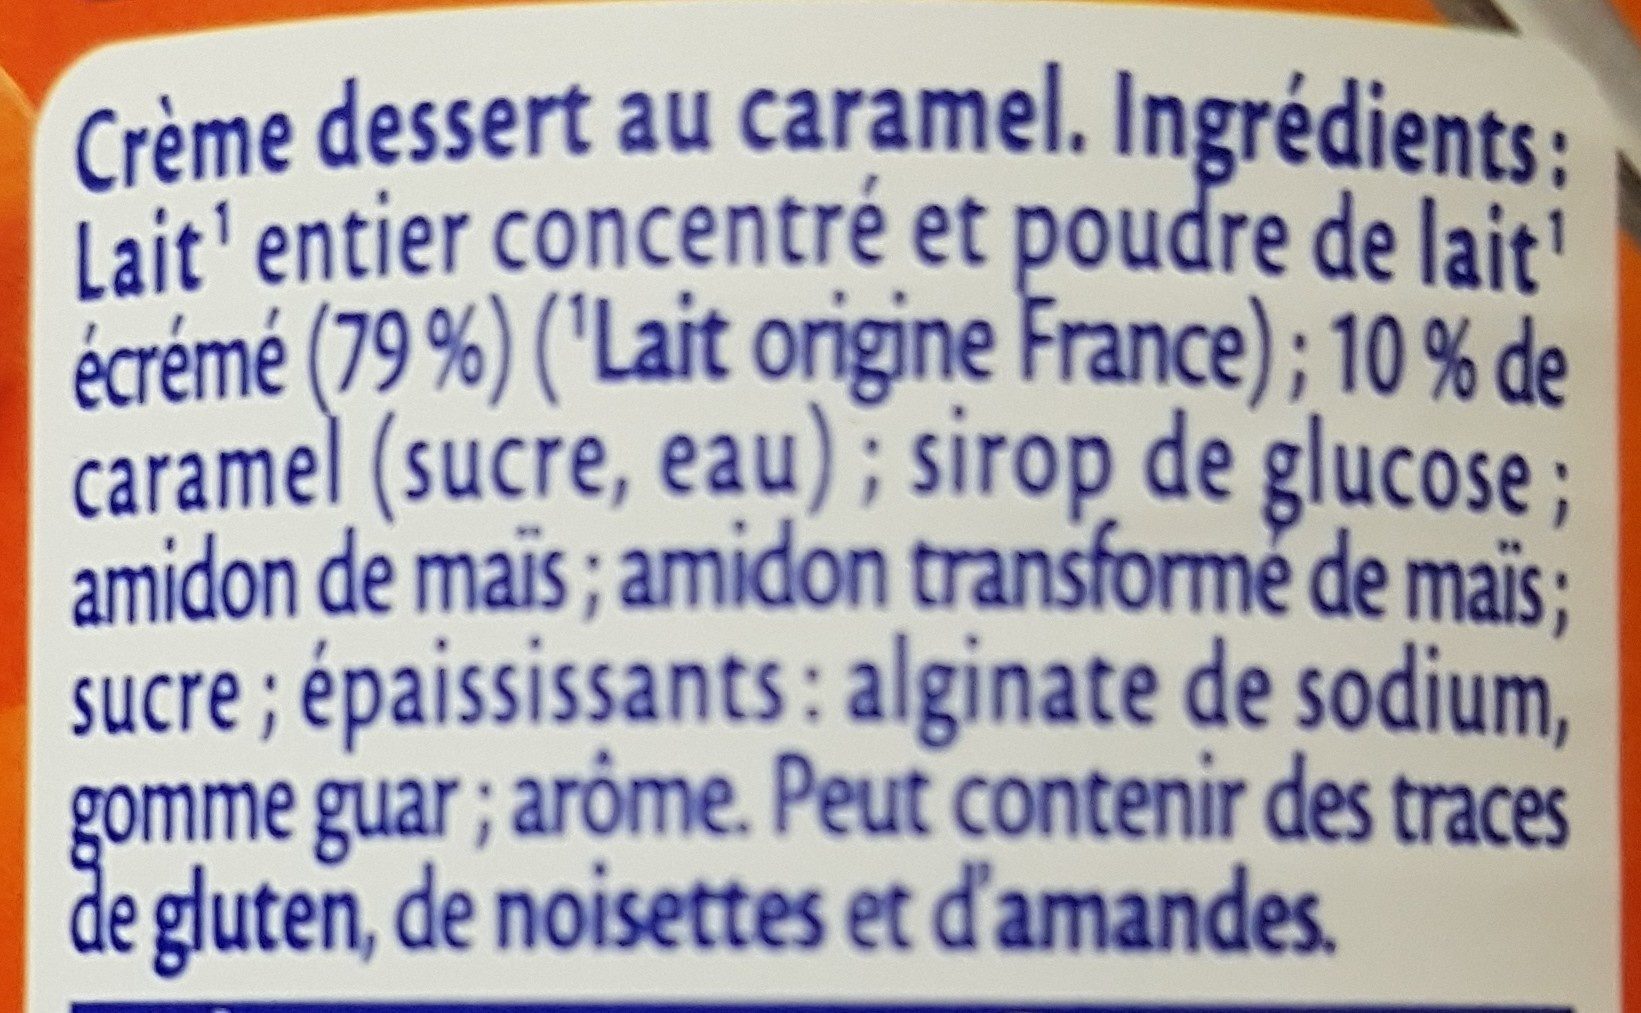 MONT BLANC Crème dessert Boîte Caramel 4x570g 3+1 Offerte - Ingrédients